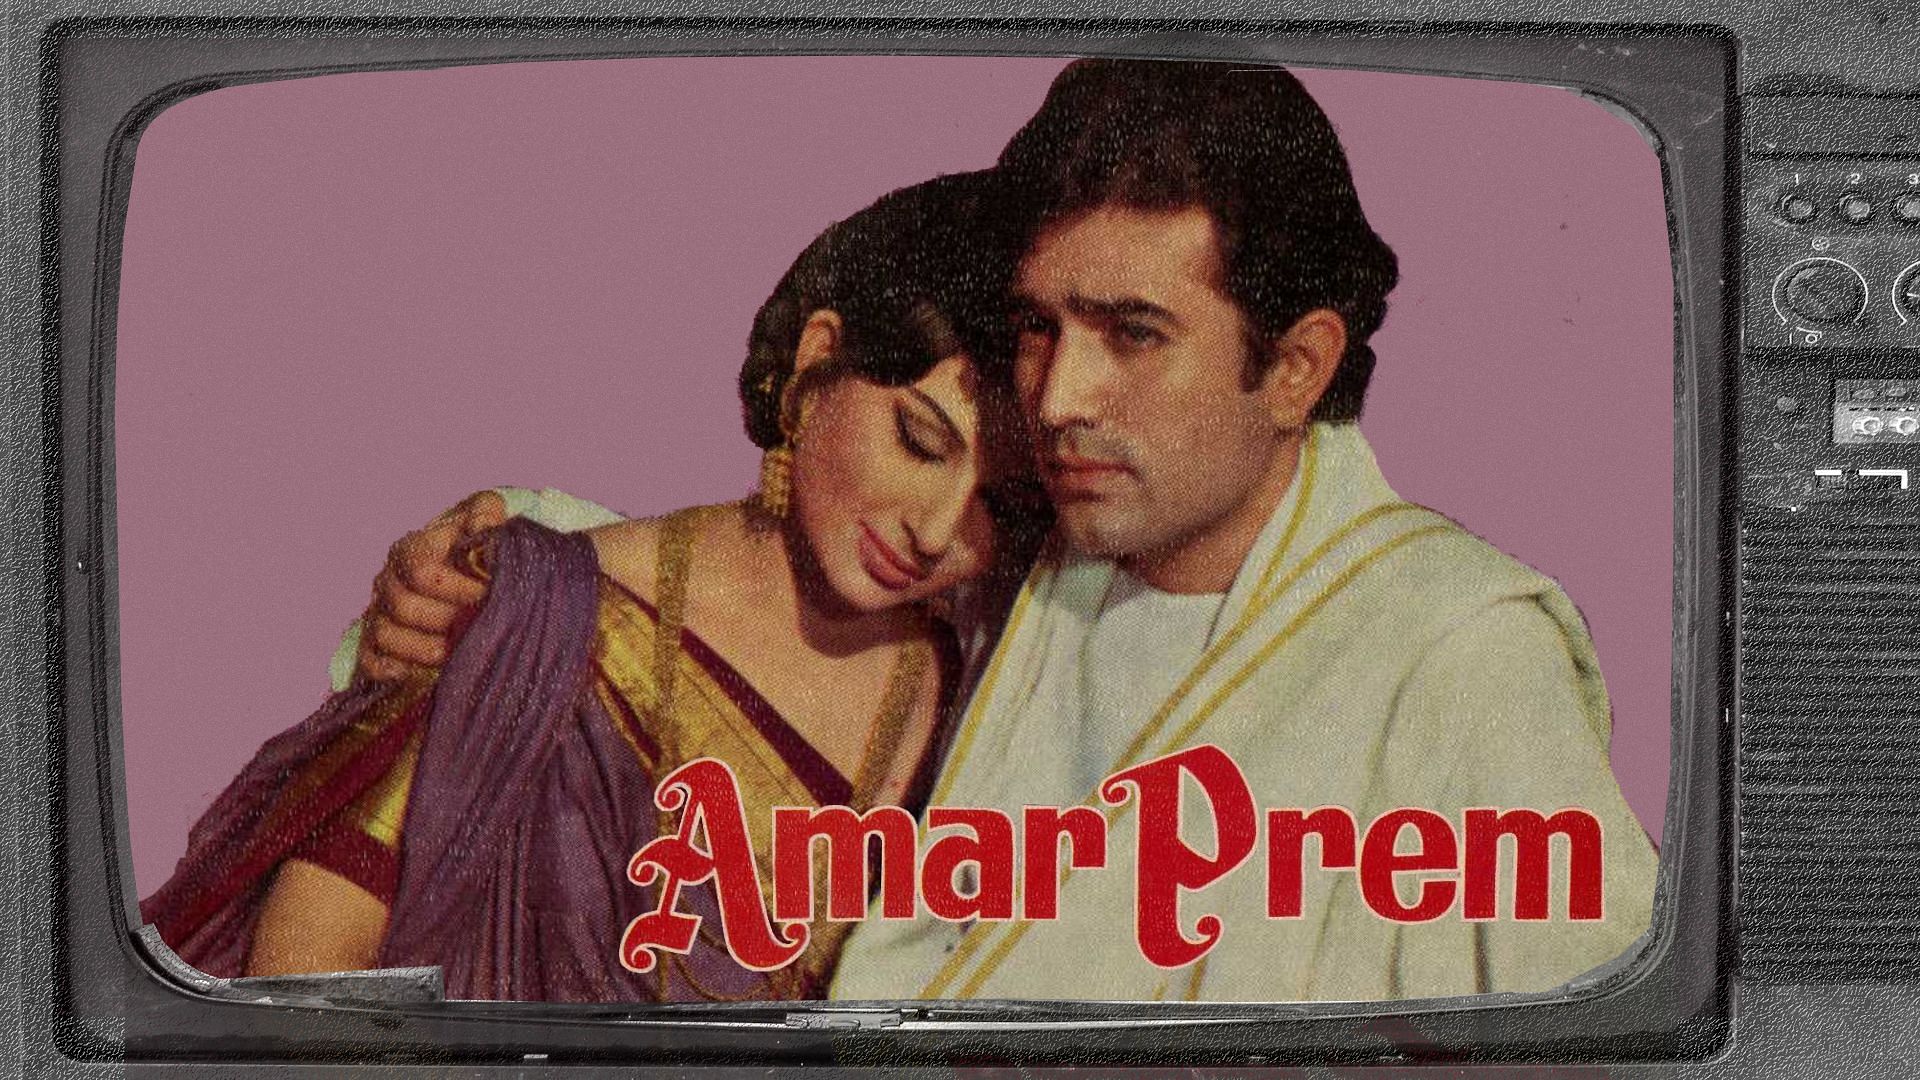 <div class="paragraphs"><p>Rajesh Khanna and Sharmila Tagore's film&nbsp;<em>Amar Prem&nbsp;</em>marks 50 years since it's release on 28 January 2022.</p></div>